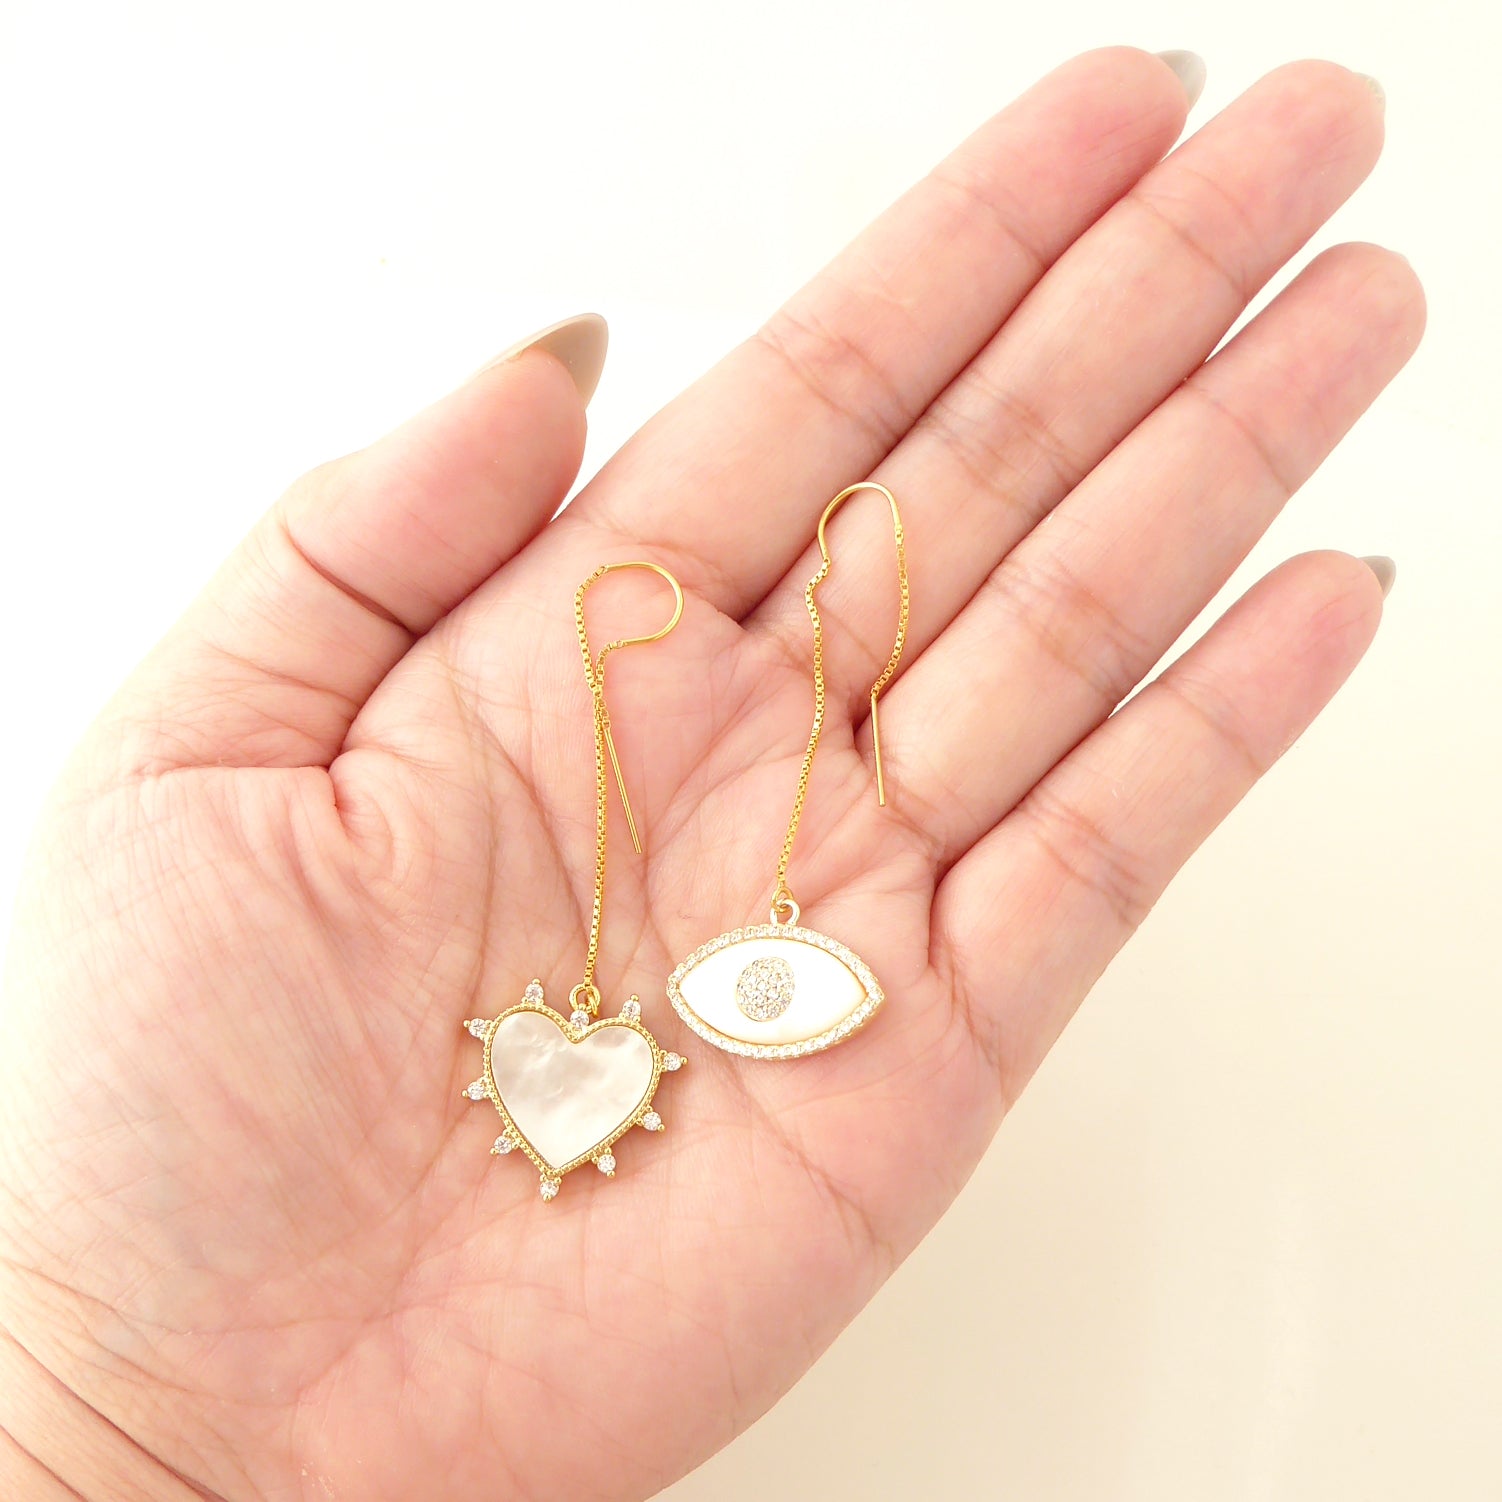 Eye love threader earrings by Jenny Dayco 4